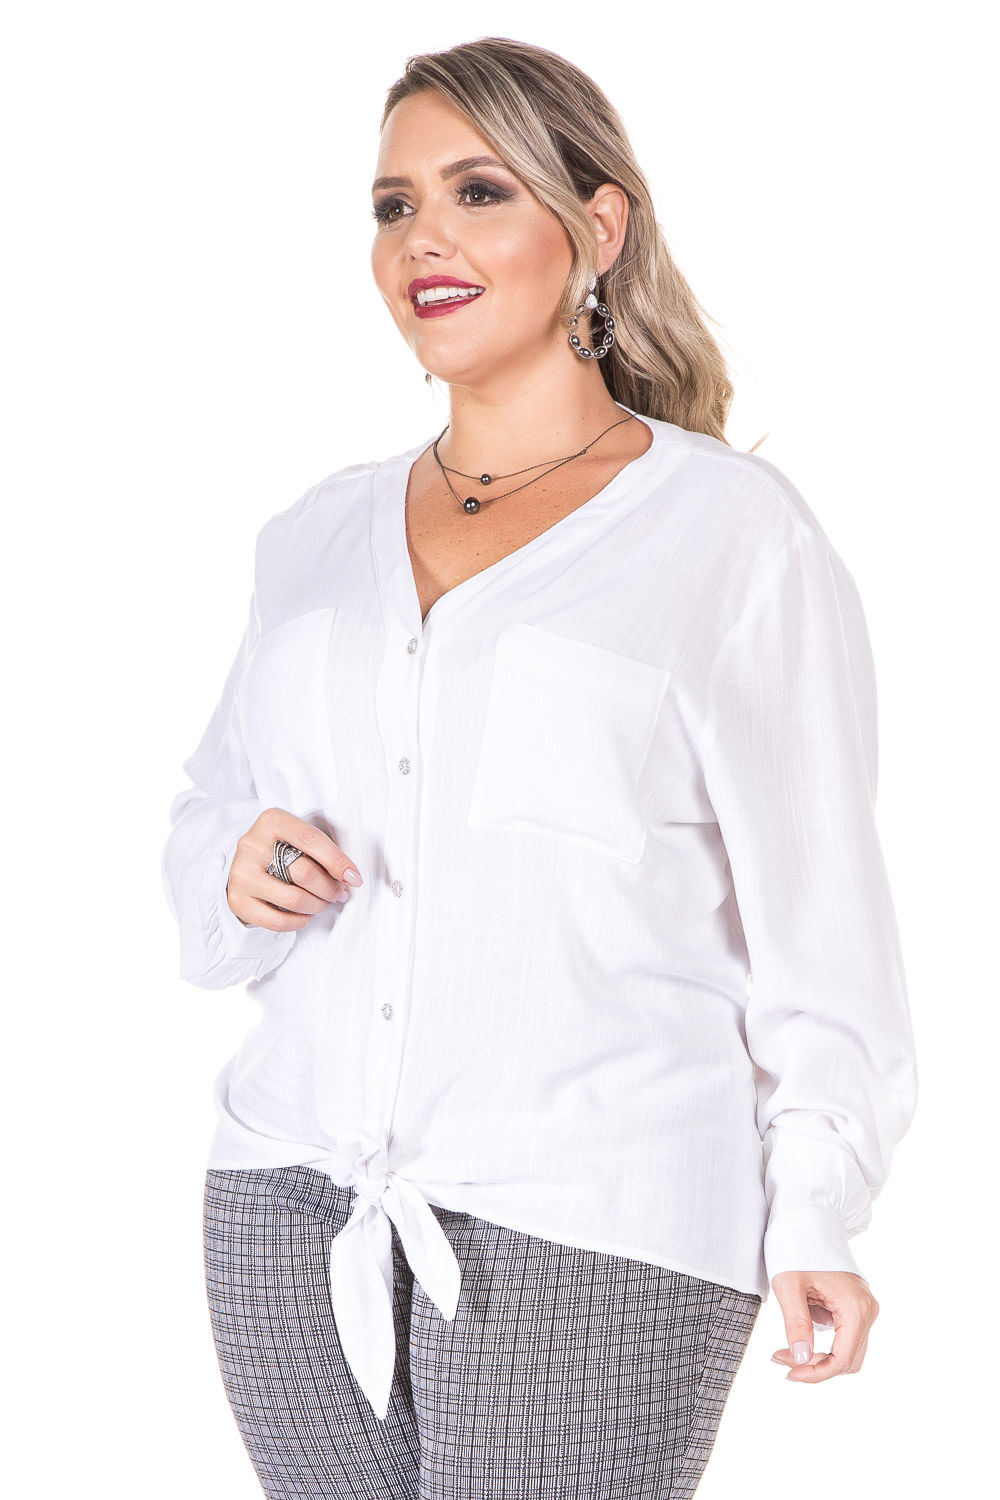 Camisa Off White Plus Size - Chic e Elegante